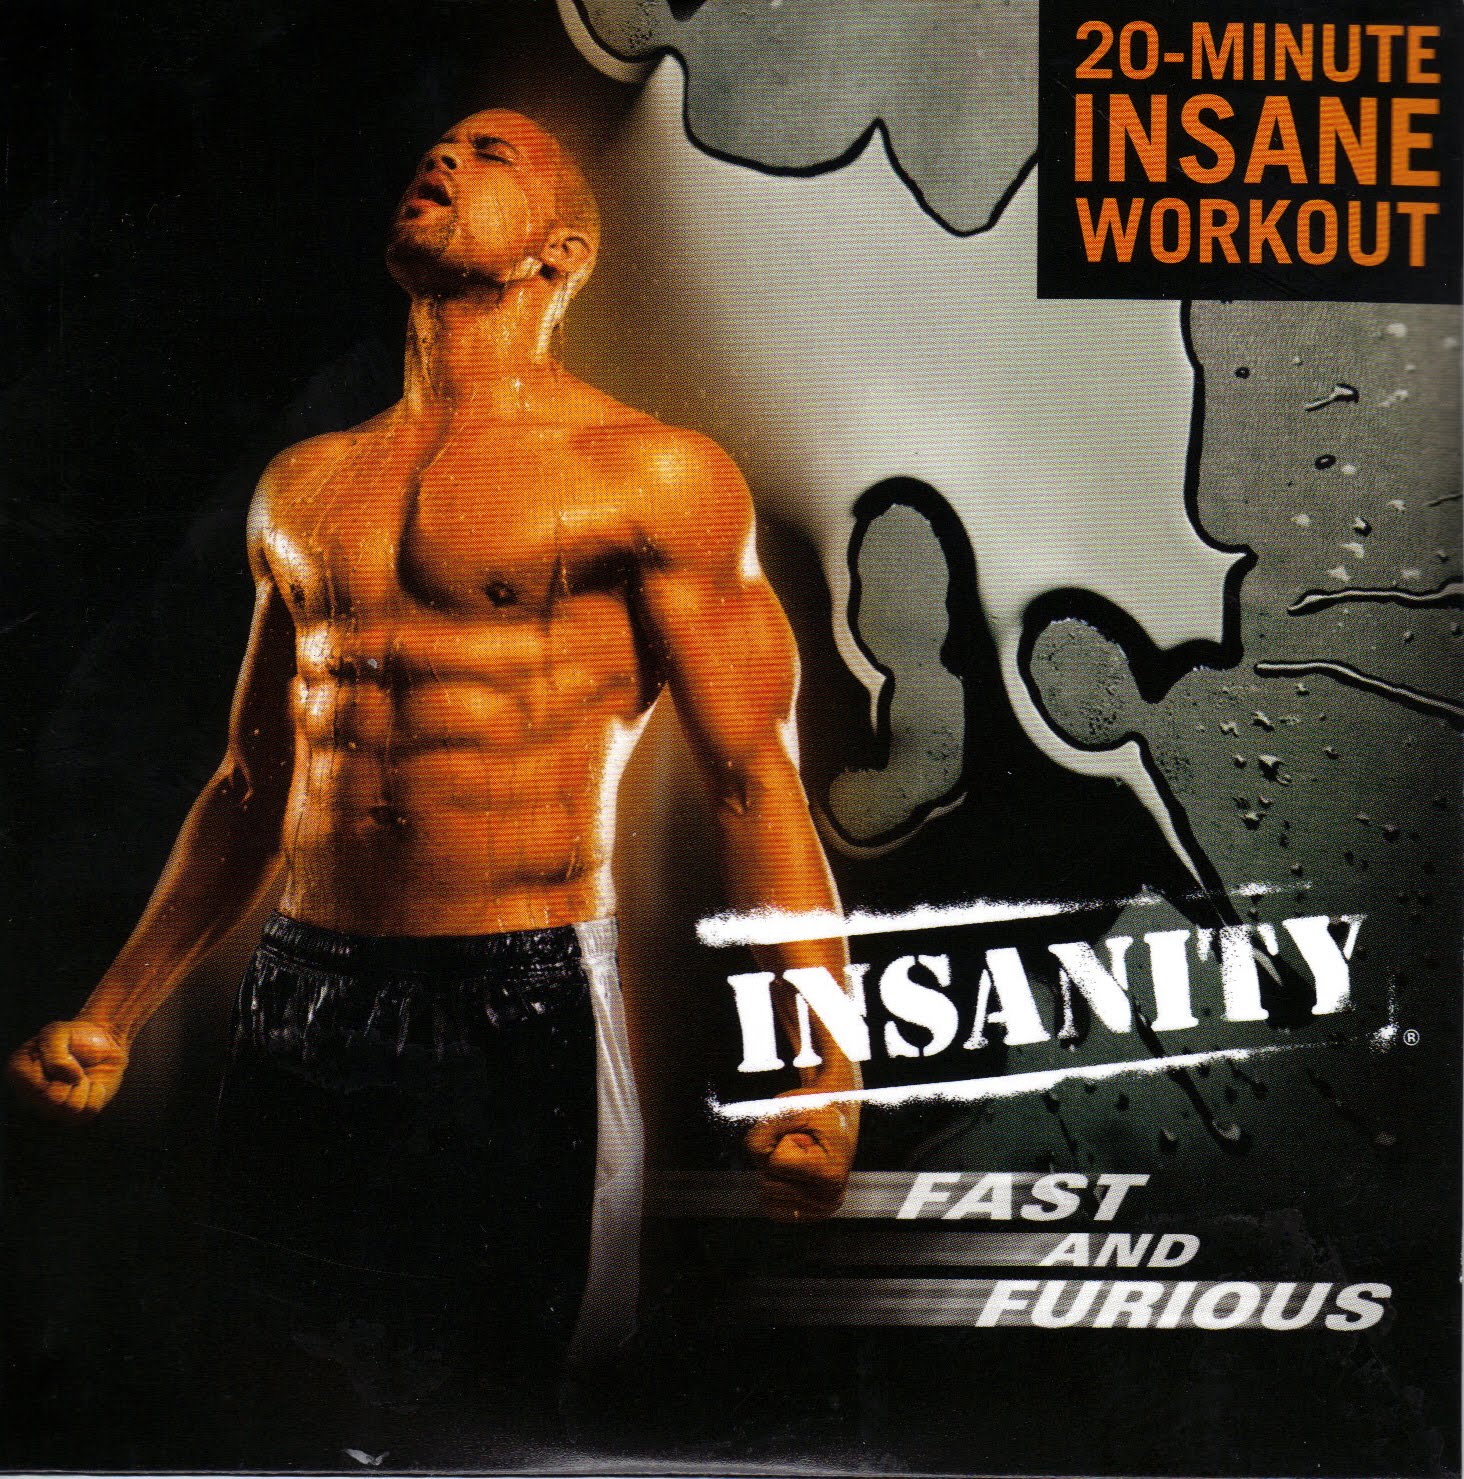 Shaun T Insanity Workouts Fast Furious Shaun T